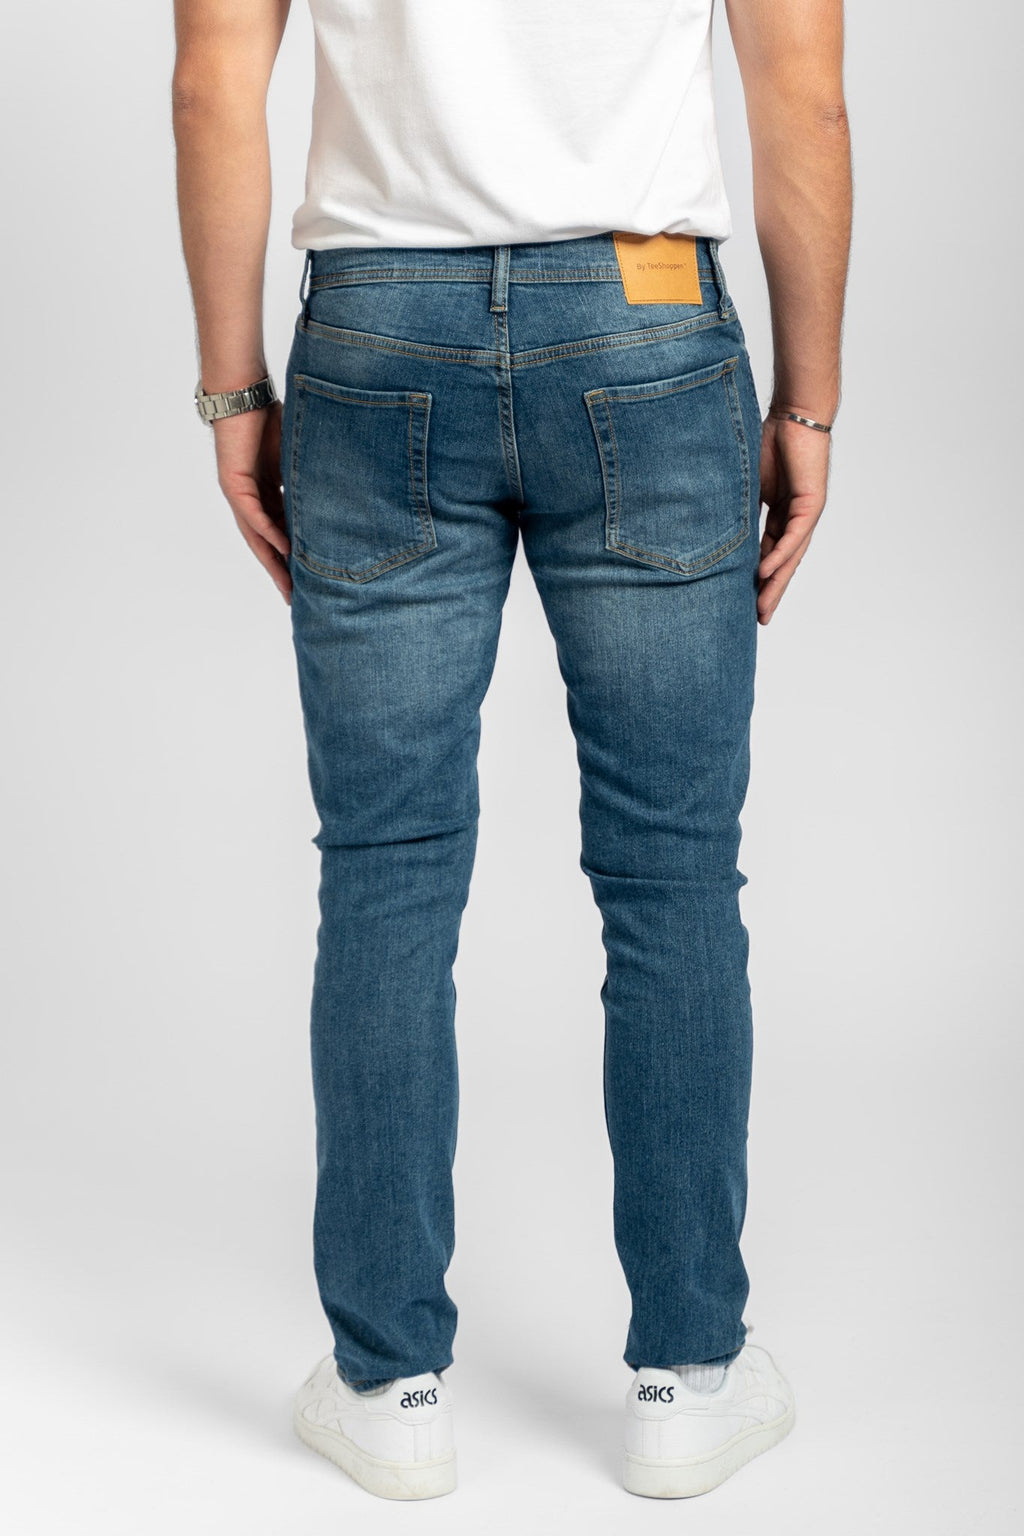 The Original Performance Jeans (Slim) - Medium Blue Denim